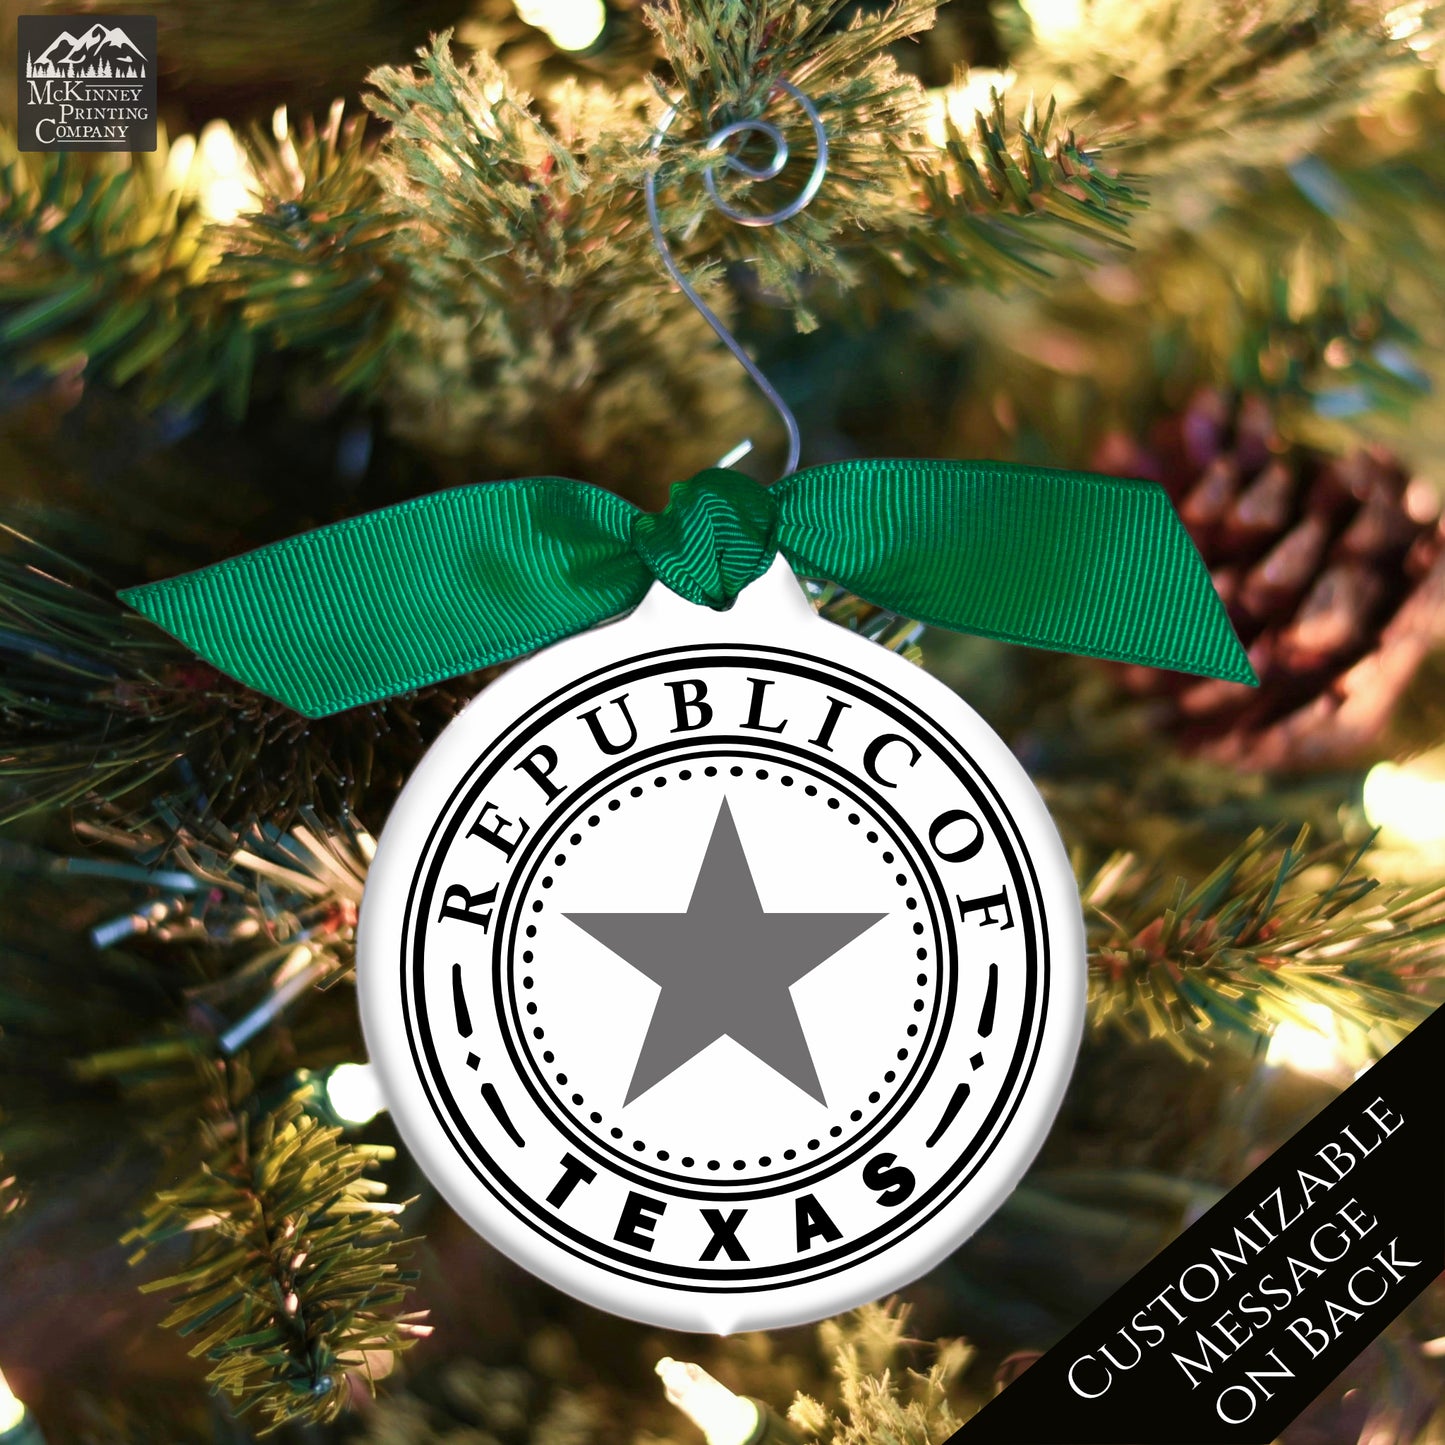 Texas Ornament - Texas Gifts, Christmas, Republic of Texas, Seal